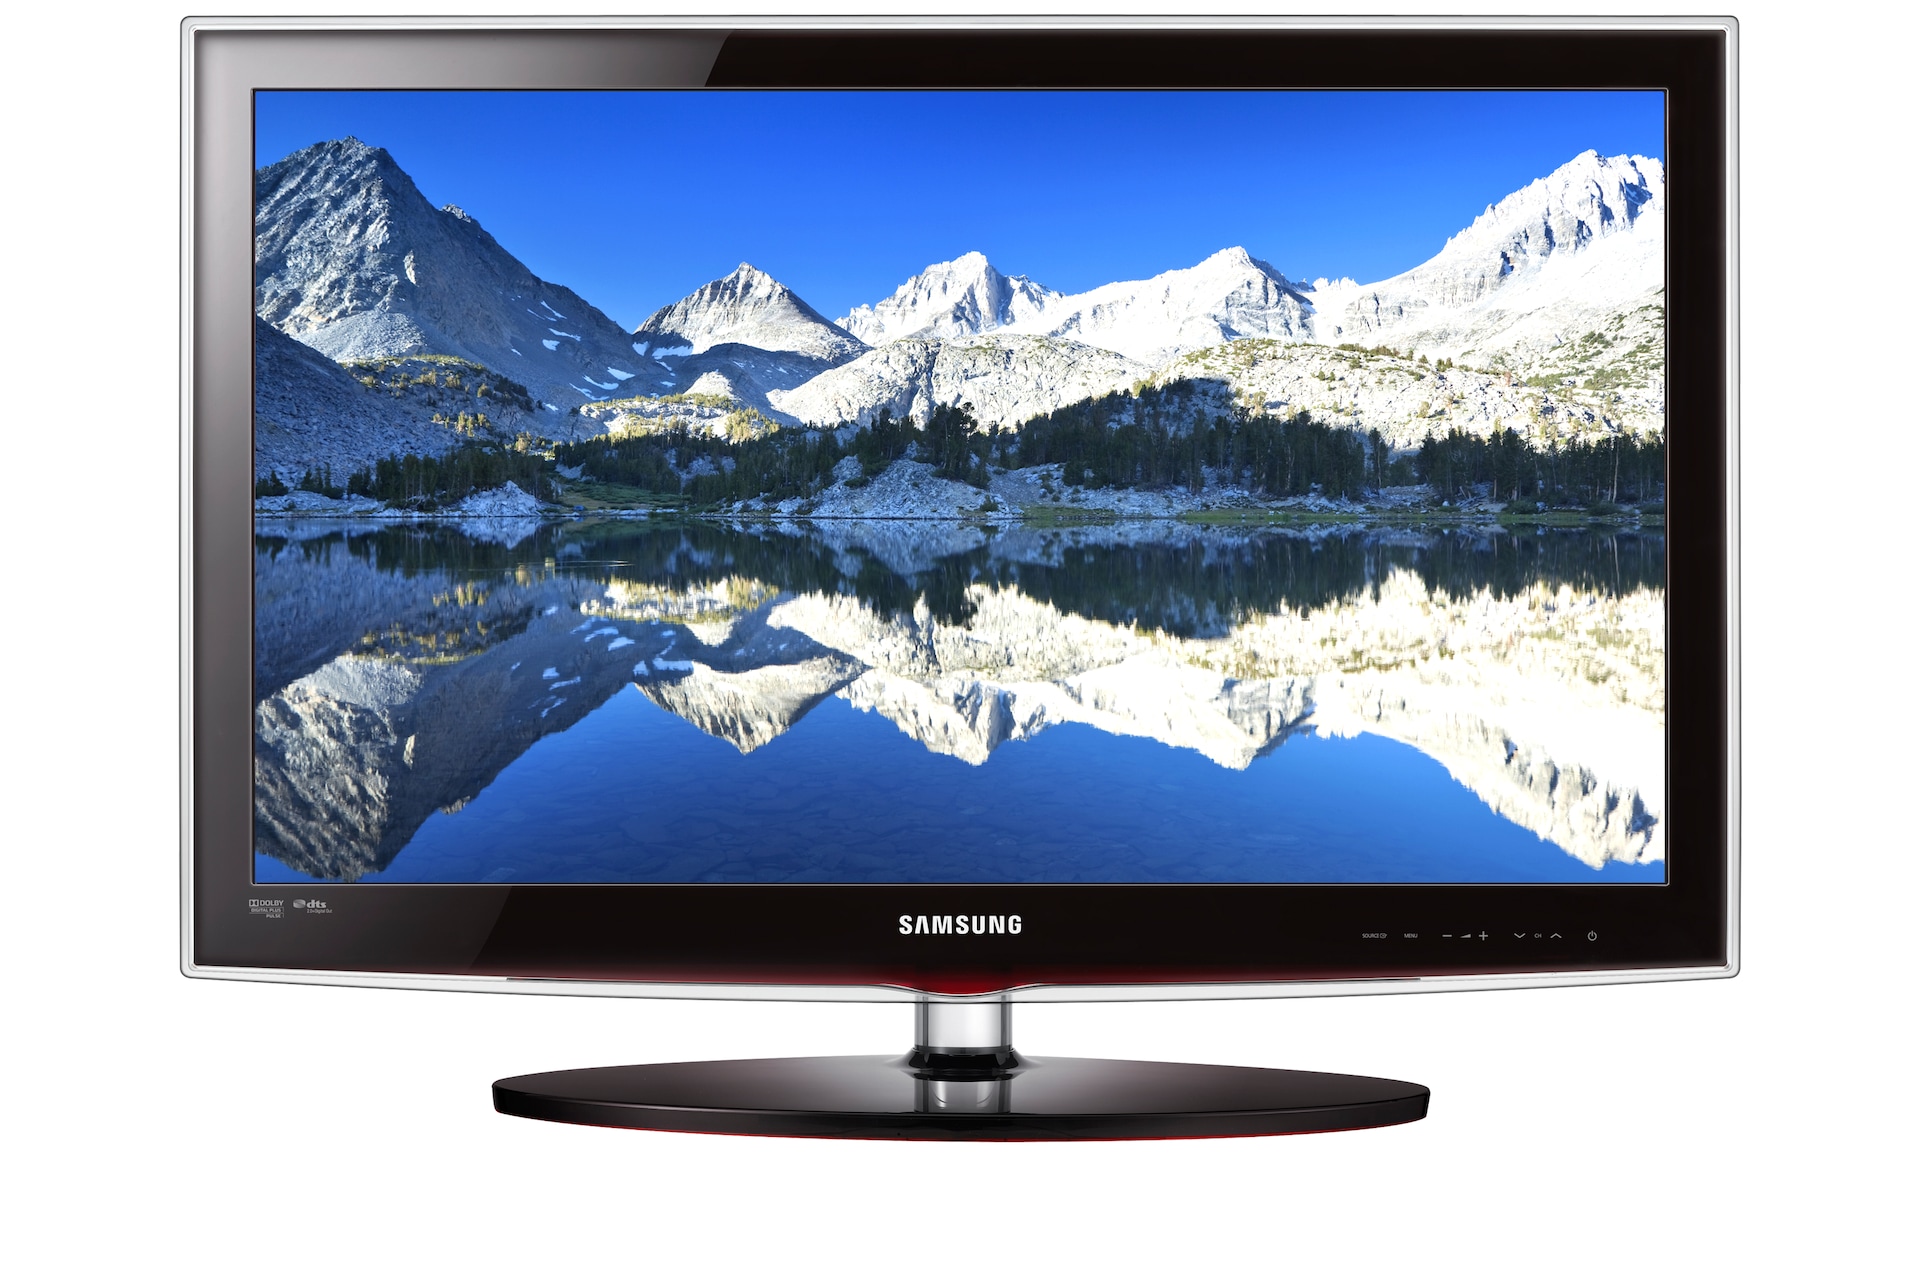 UE32C4000PW 32" LED TV 2010es model Samsung Magyarország